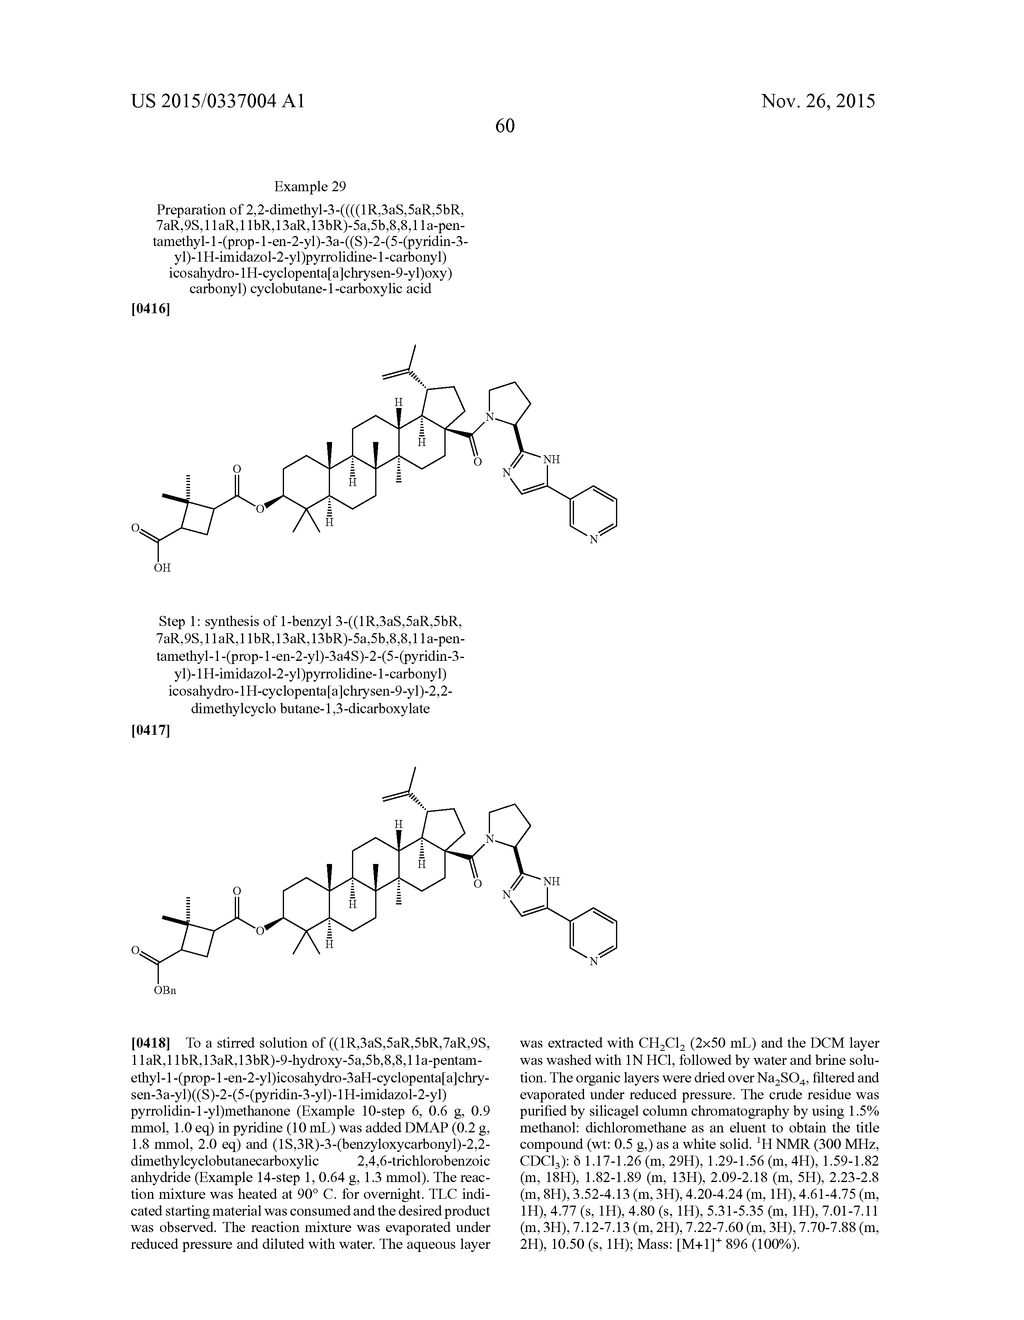 NOVEL BETULINIC ACID PROLINE DERIVATIVES AS HIV INHIBITORS - diagram, schematic, and image 61